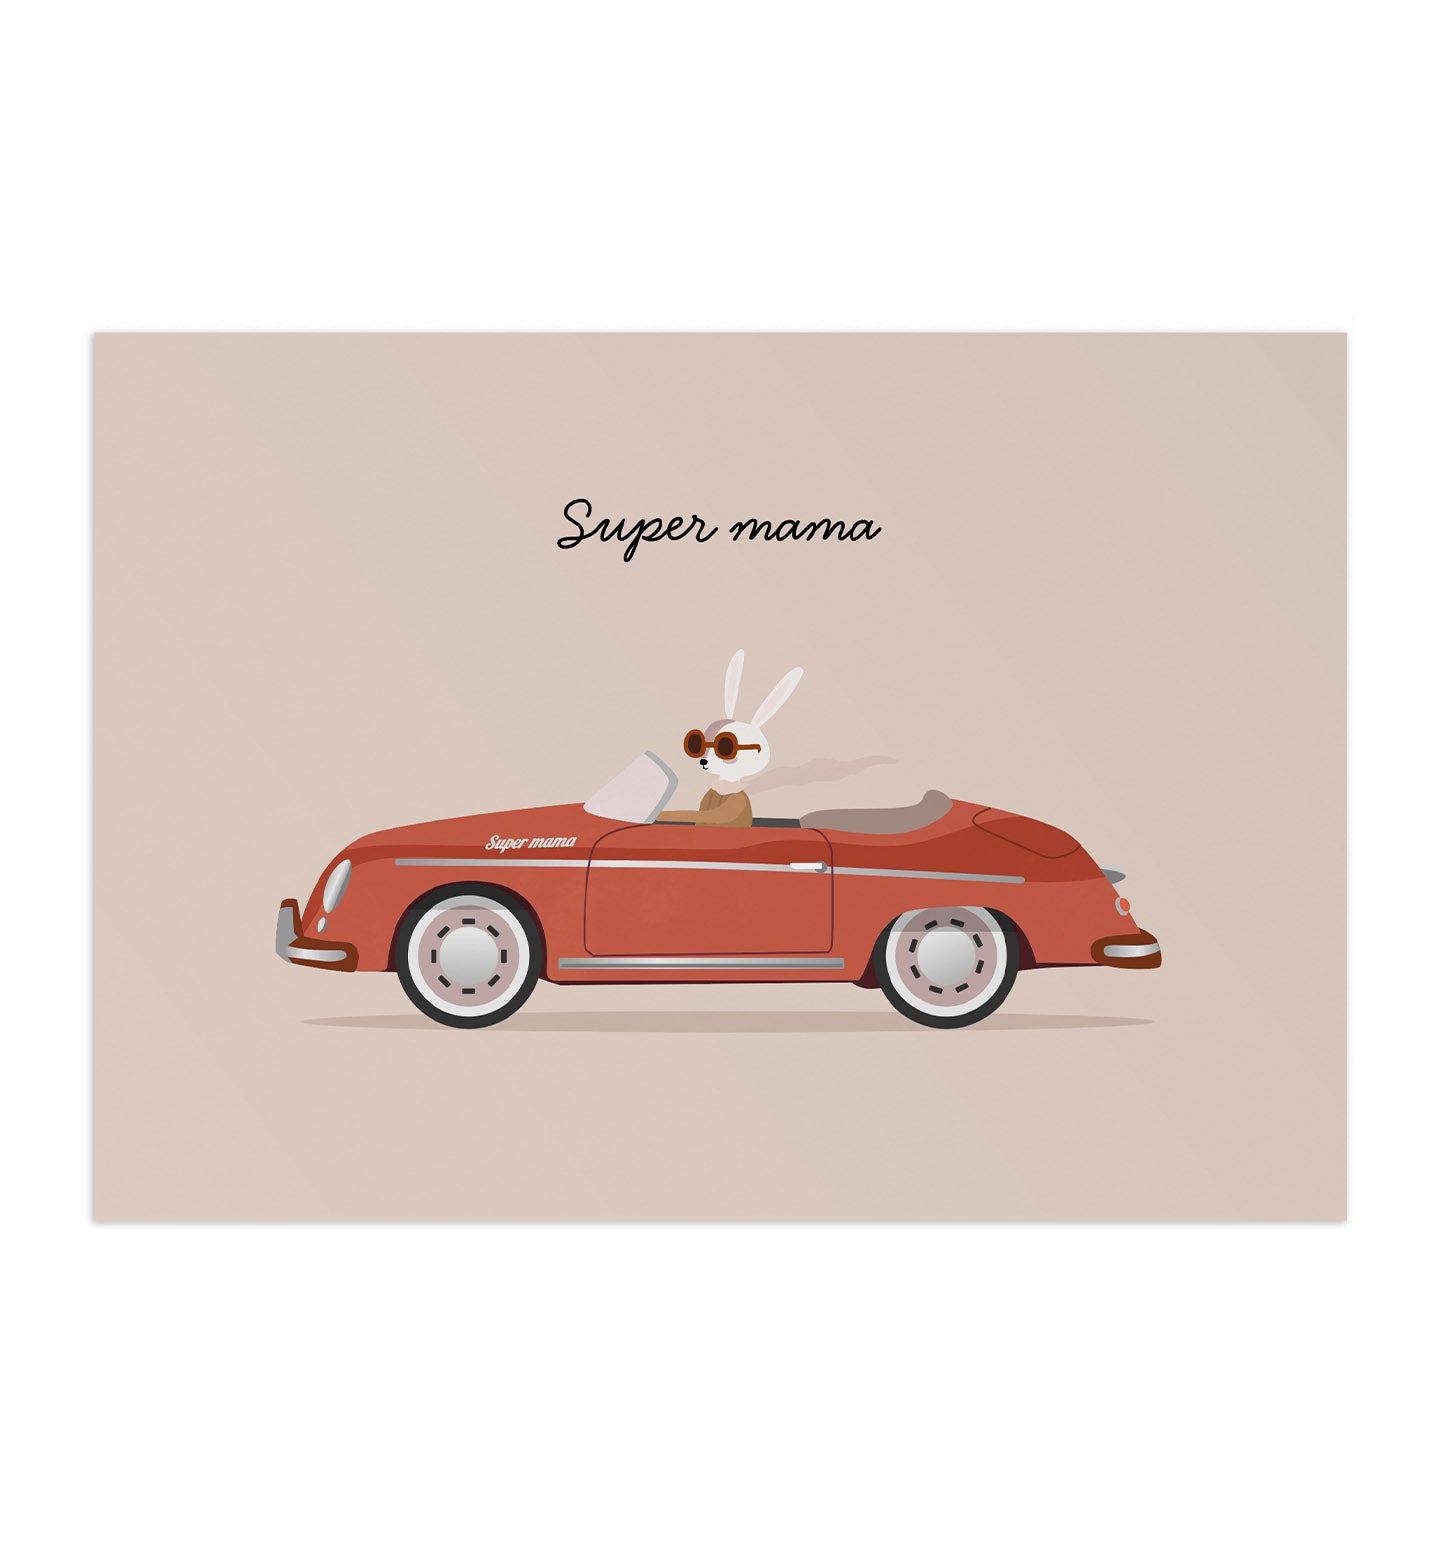 Super Mum Driving Art Print (6689522417835)